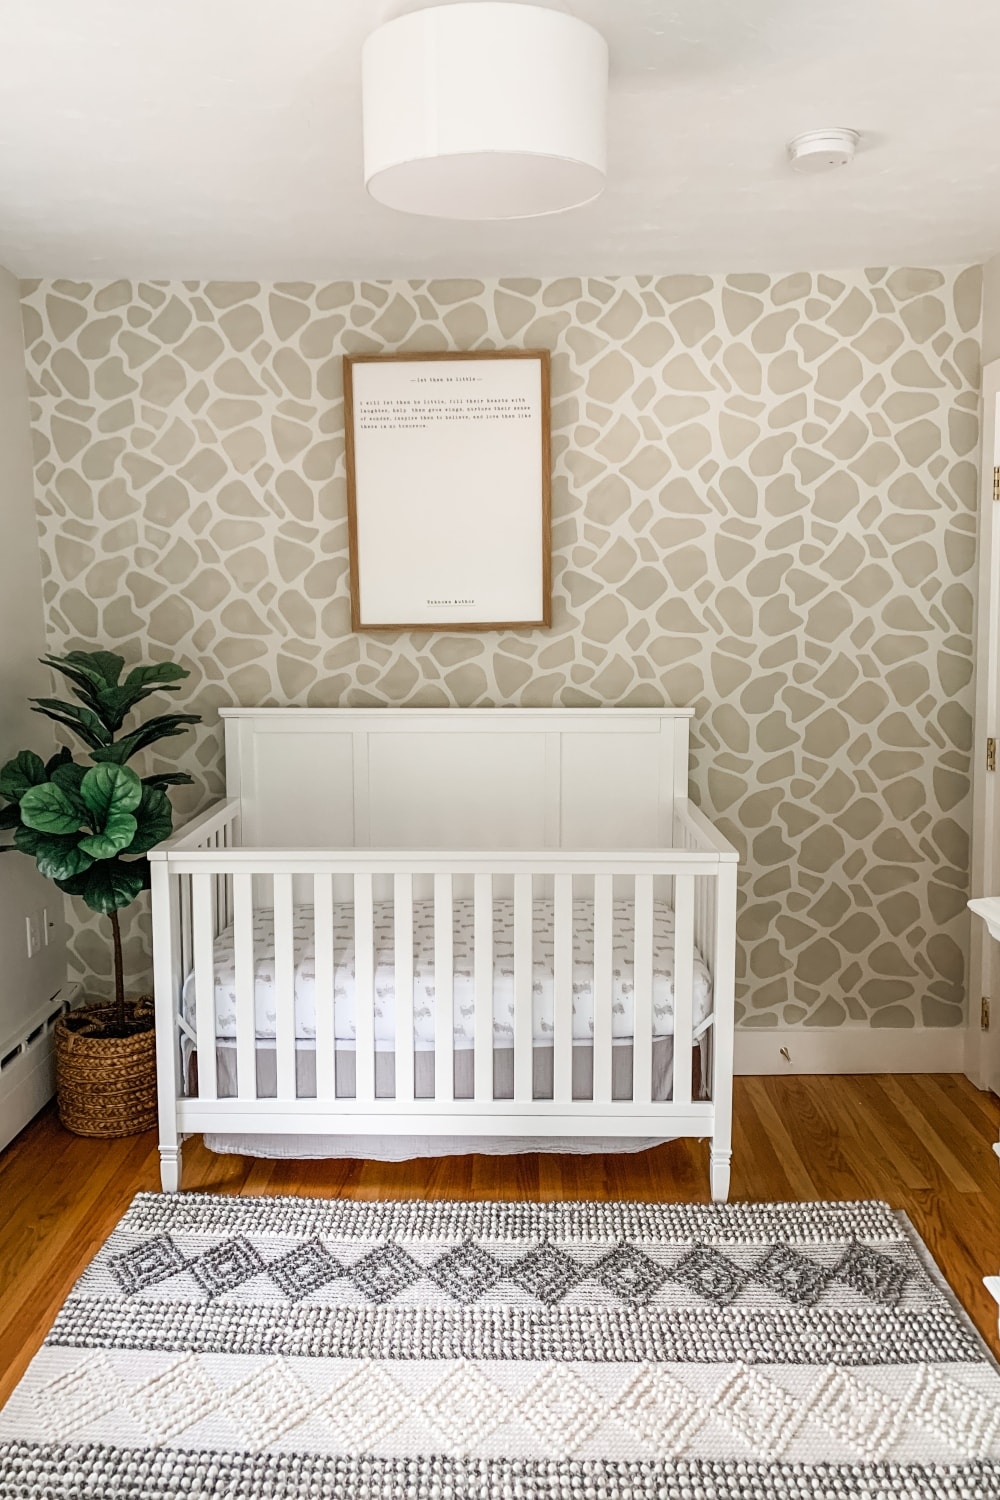 Giraffe Print nursery accent wall with crib, fiddle leaf tree and nursery wall print